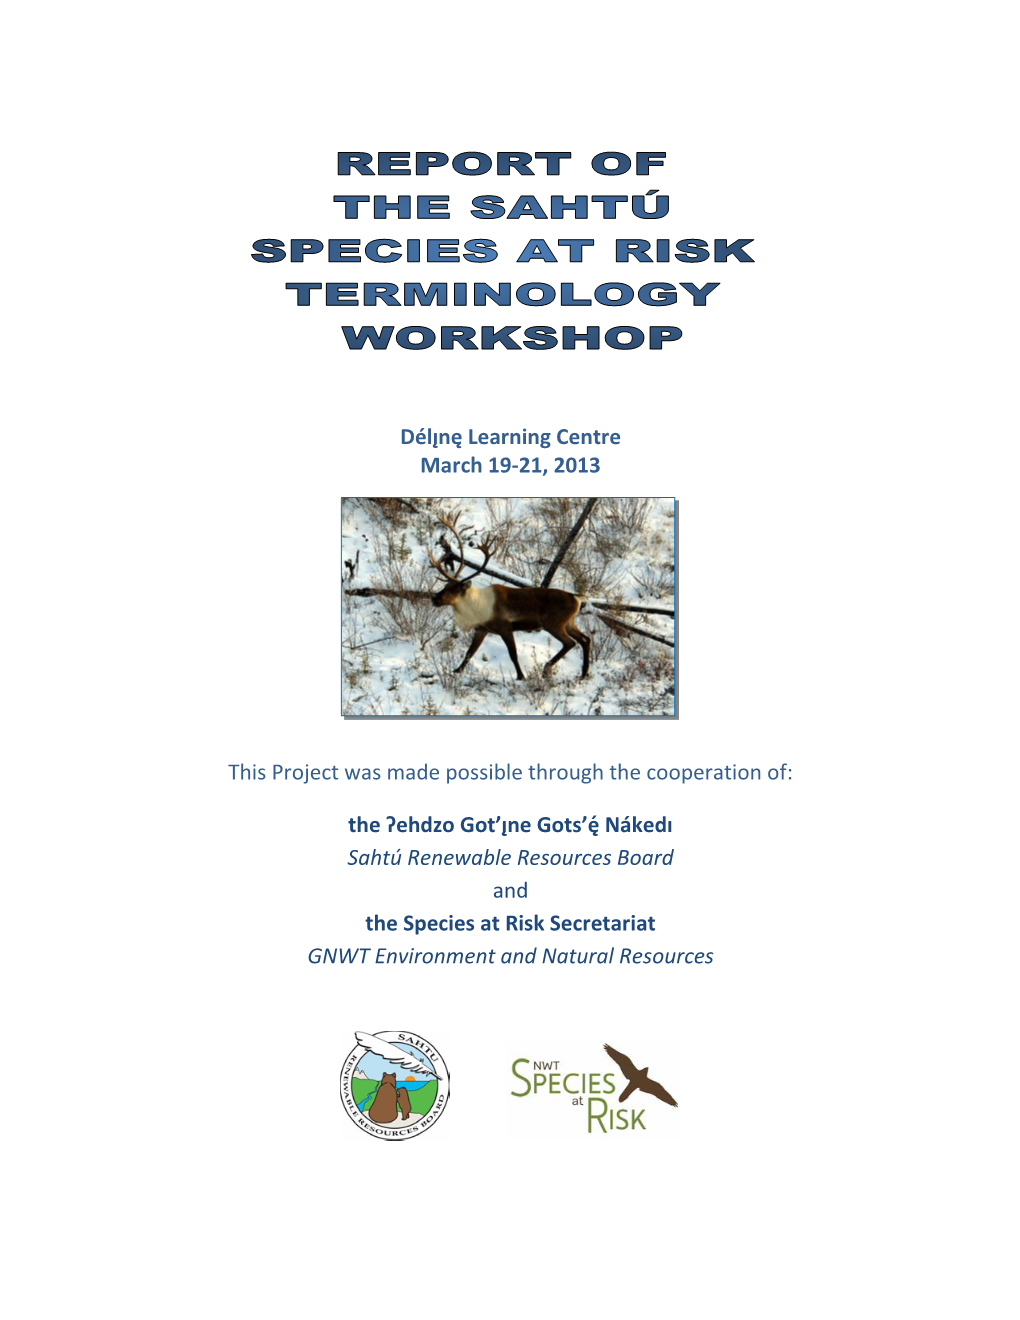 Report of the Sahtu Species at Risk Terminology Workshop